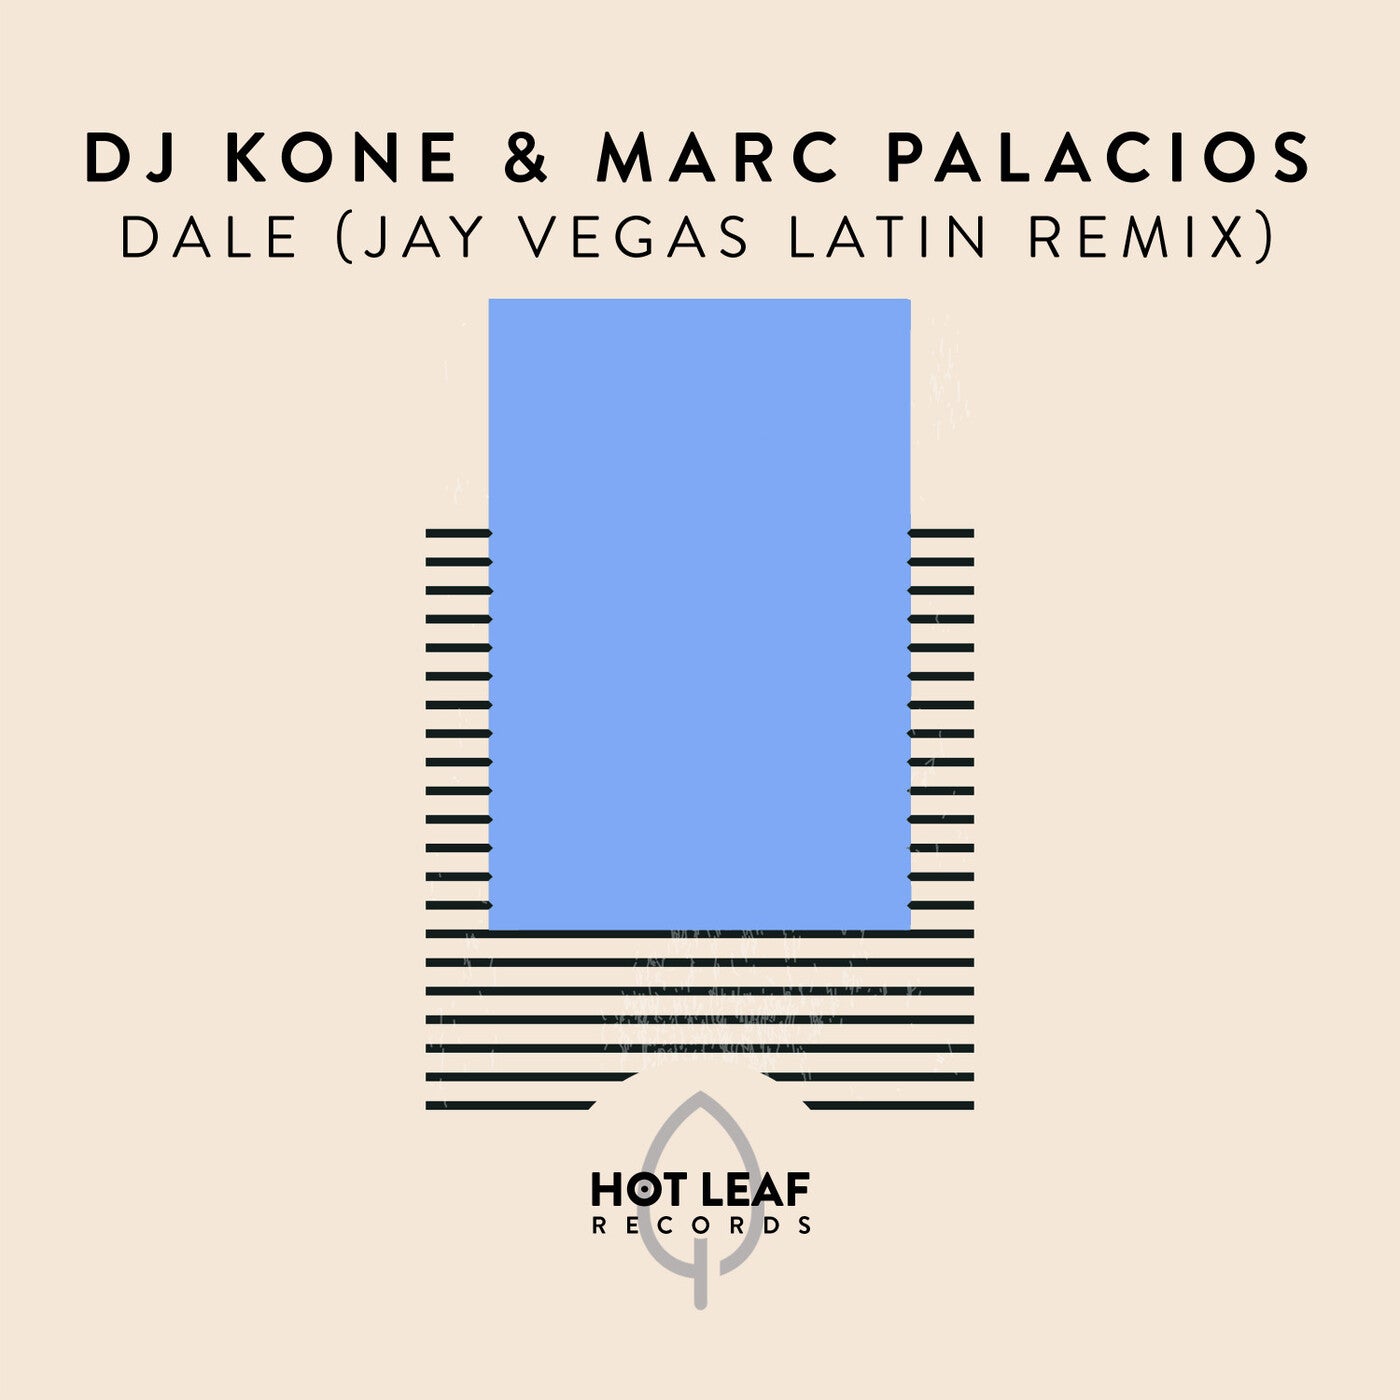 Dale (Jay Vegas Latin Remix)